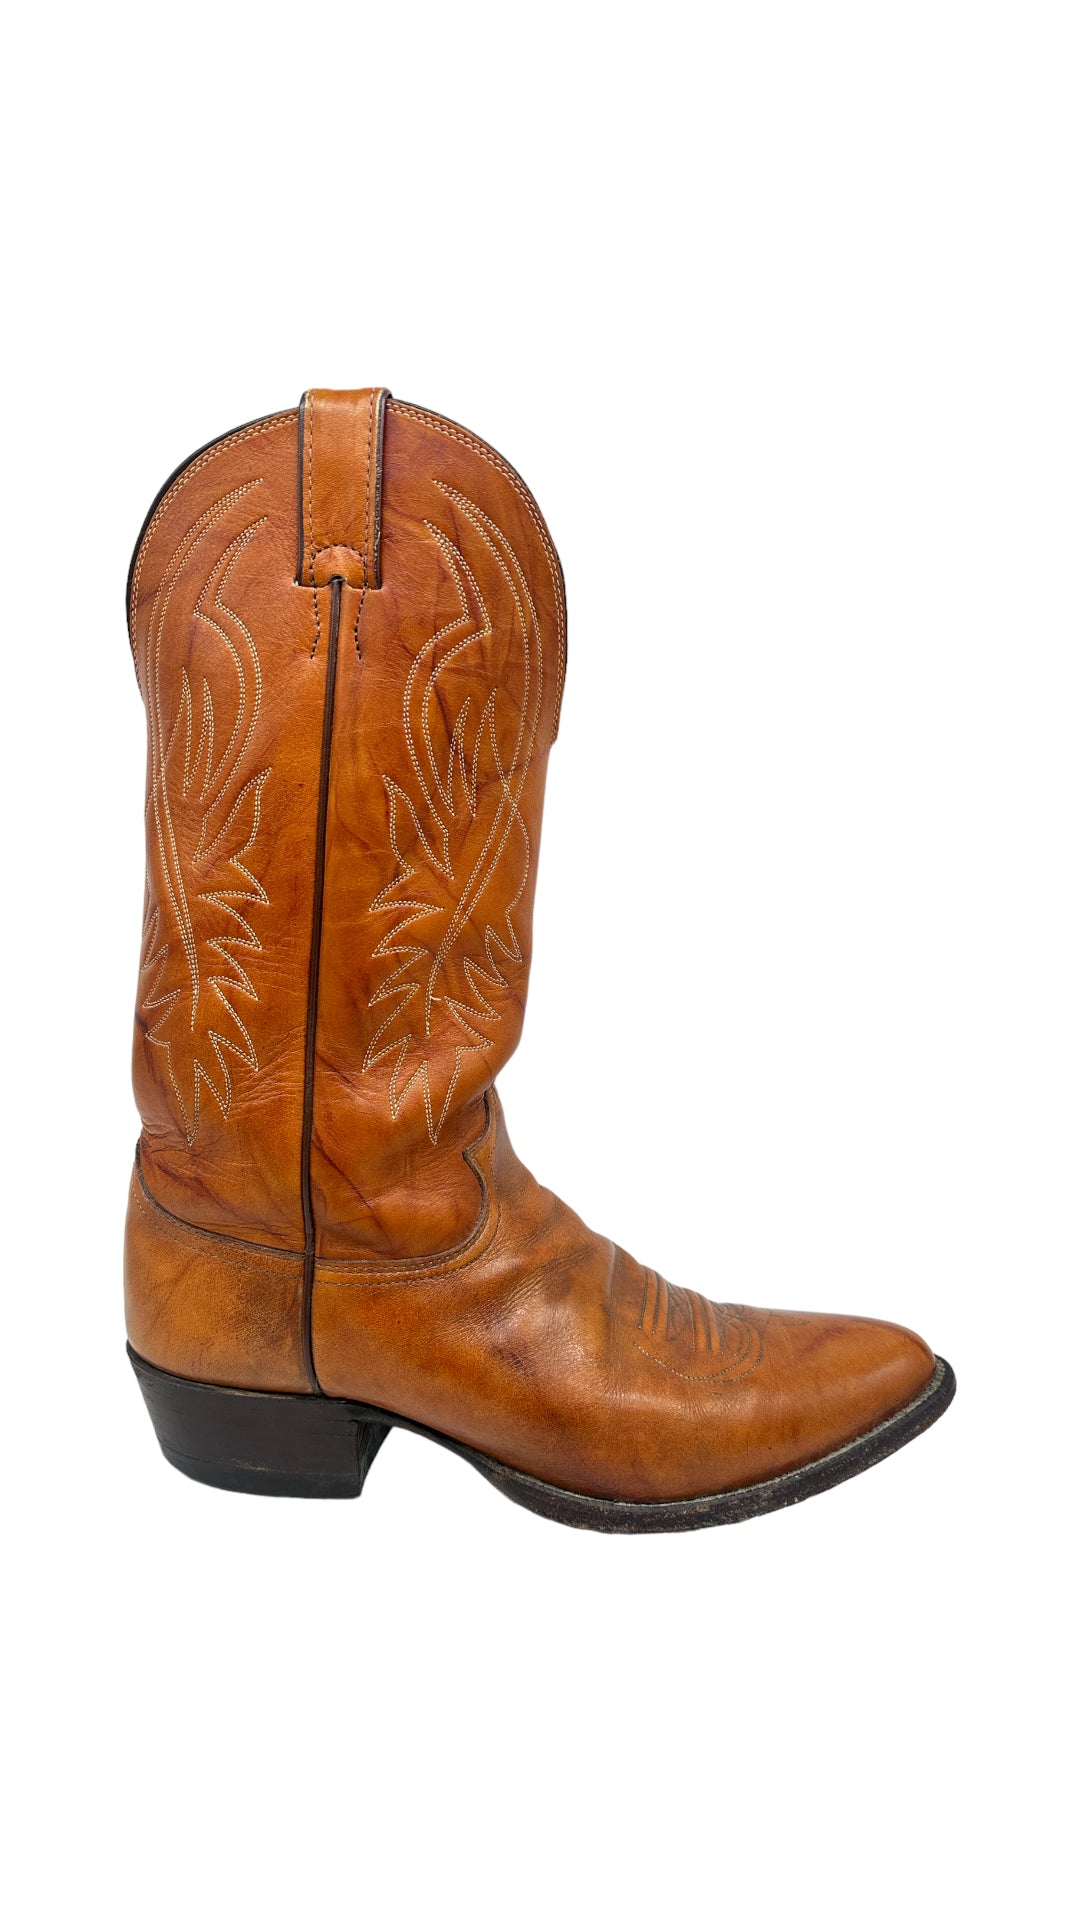 VTG Chestnut Justin Cowboy Boots Sz 10.5D